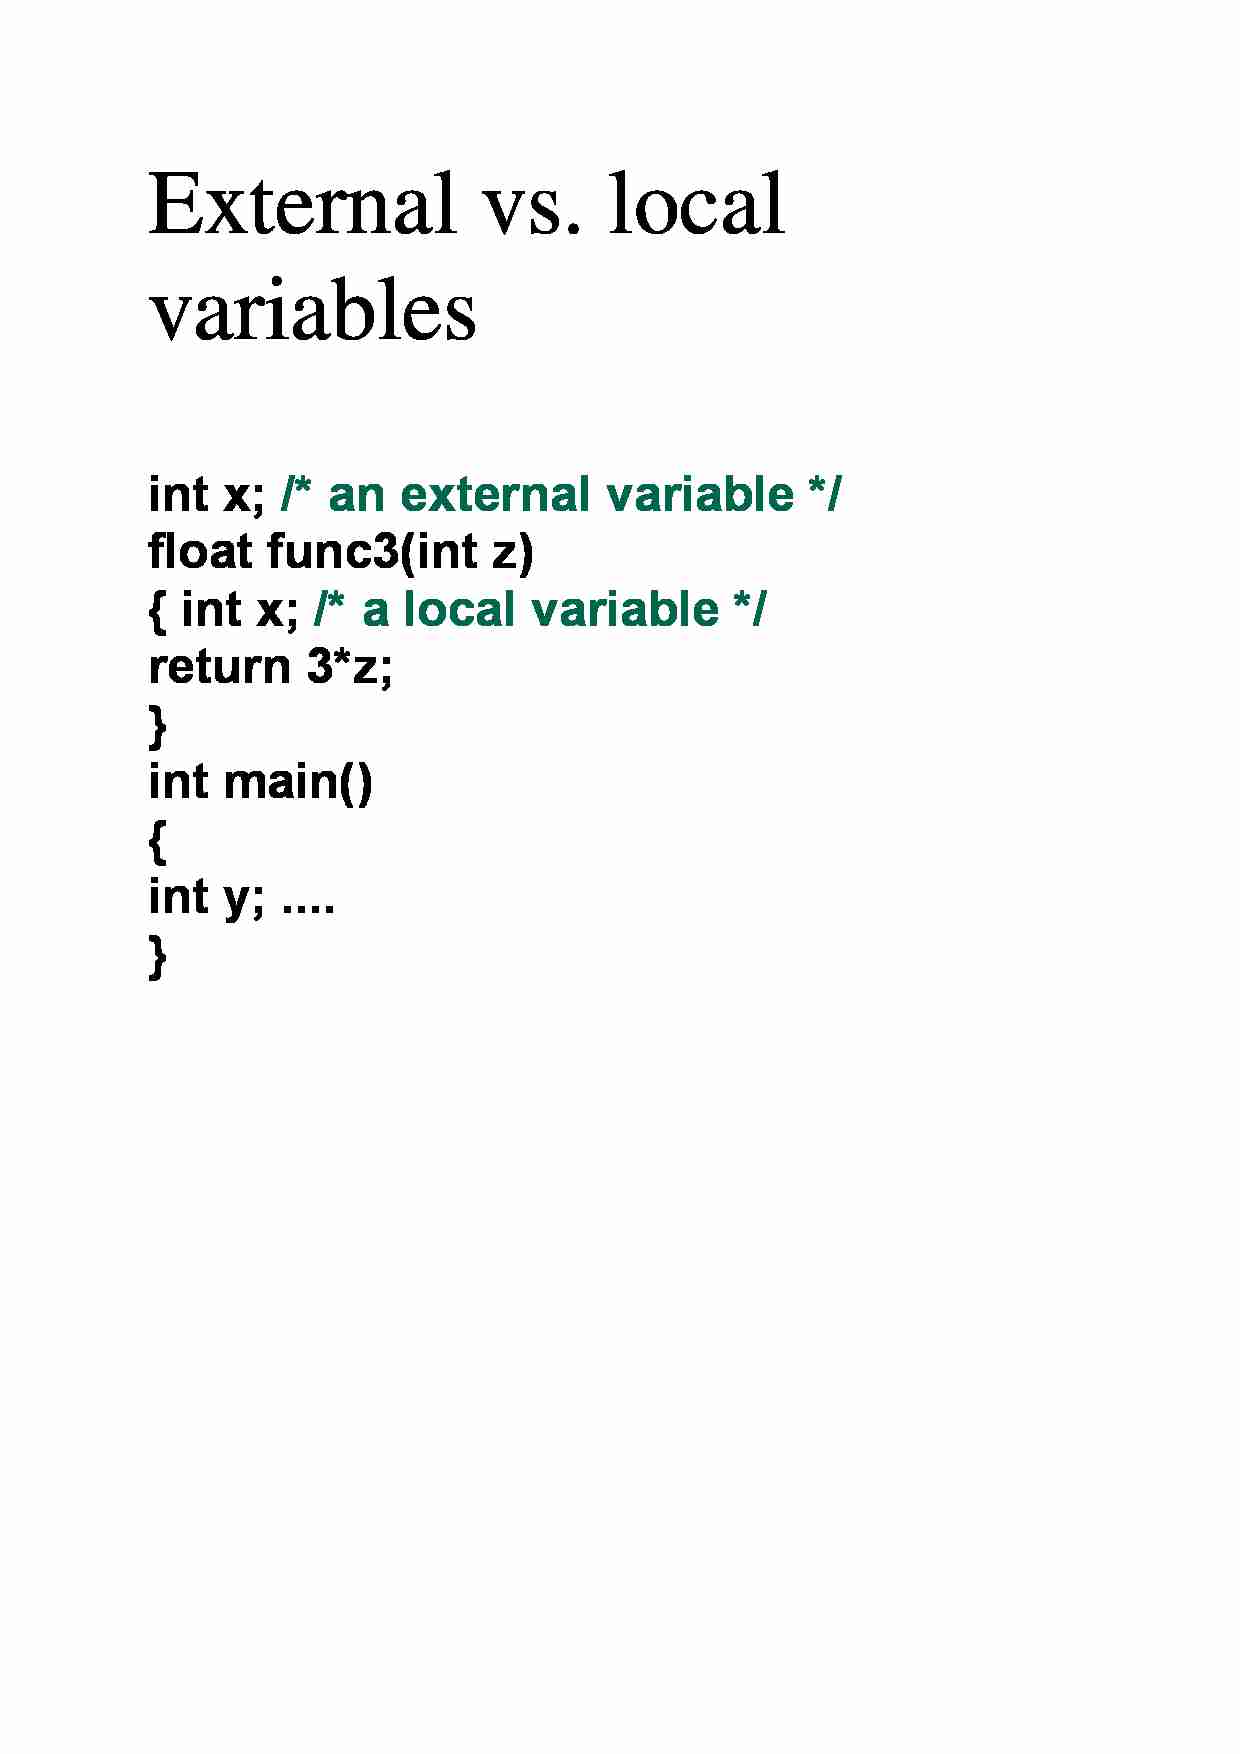 External vs local variables - strona 1